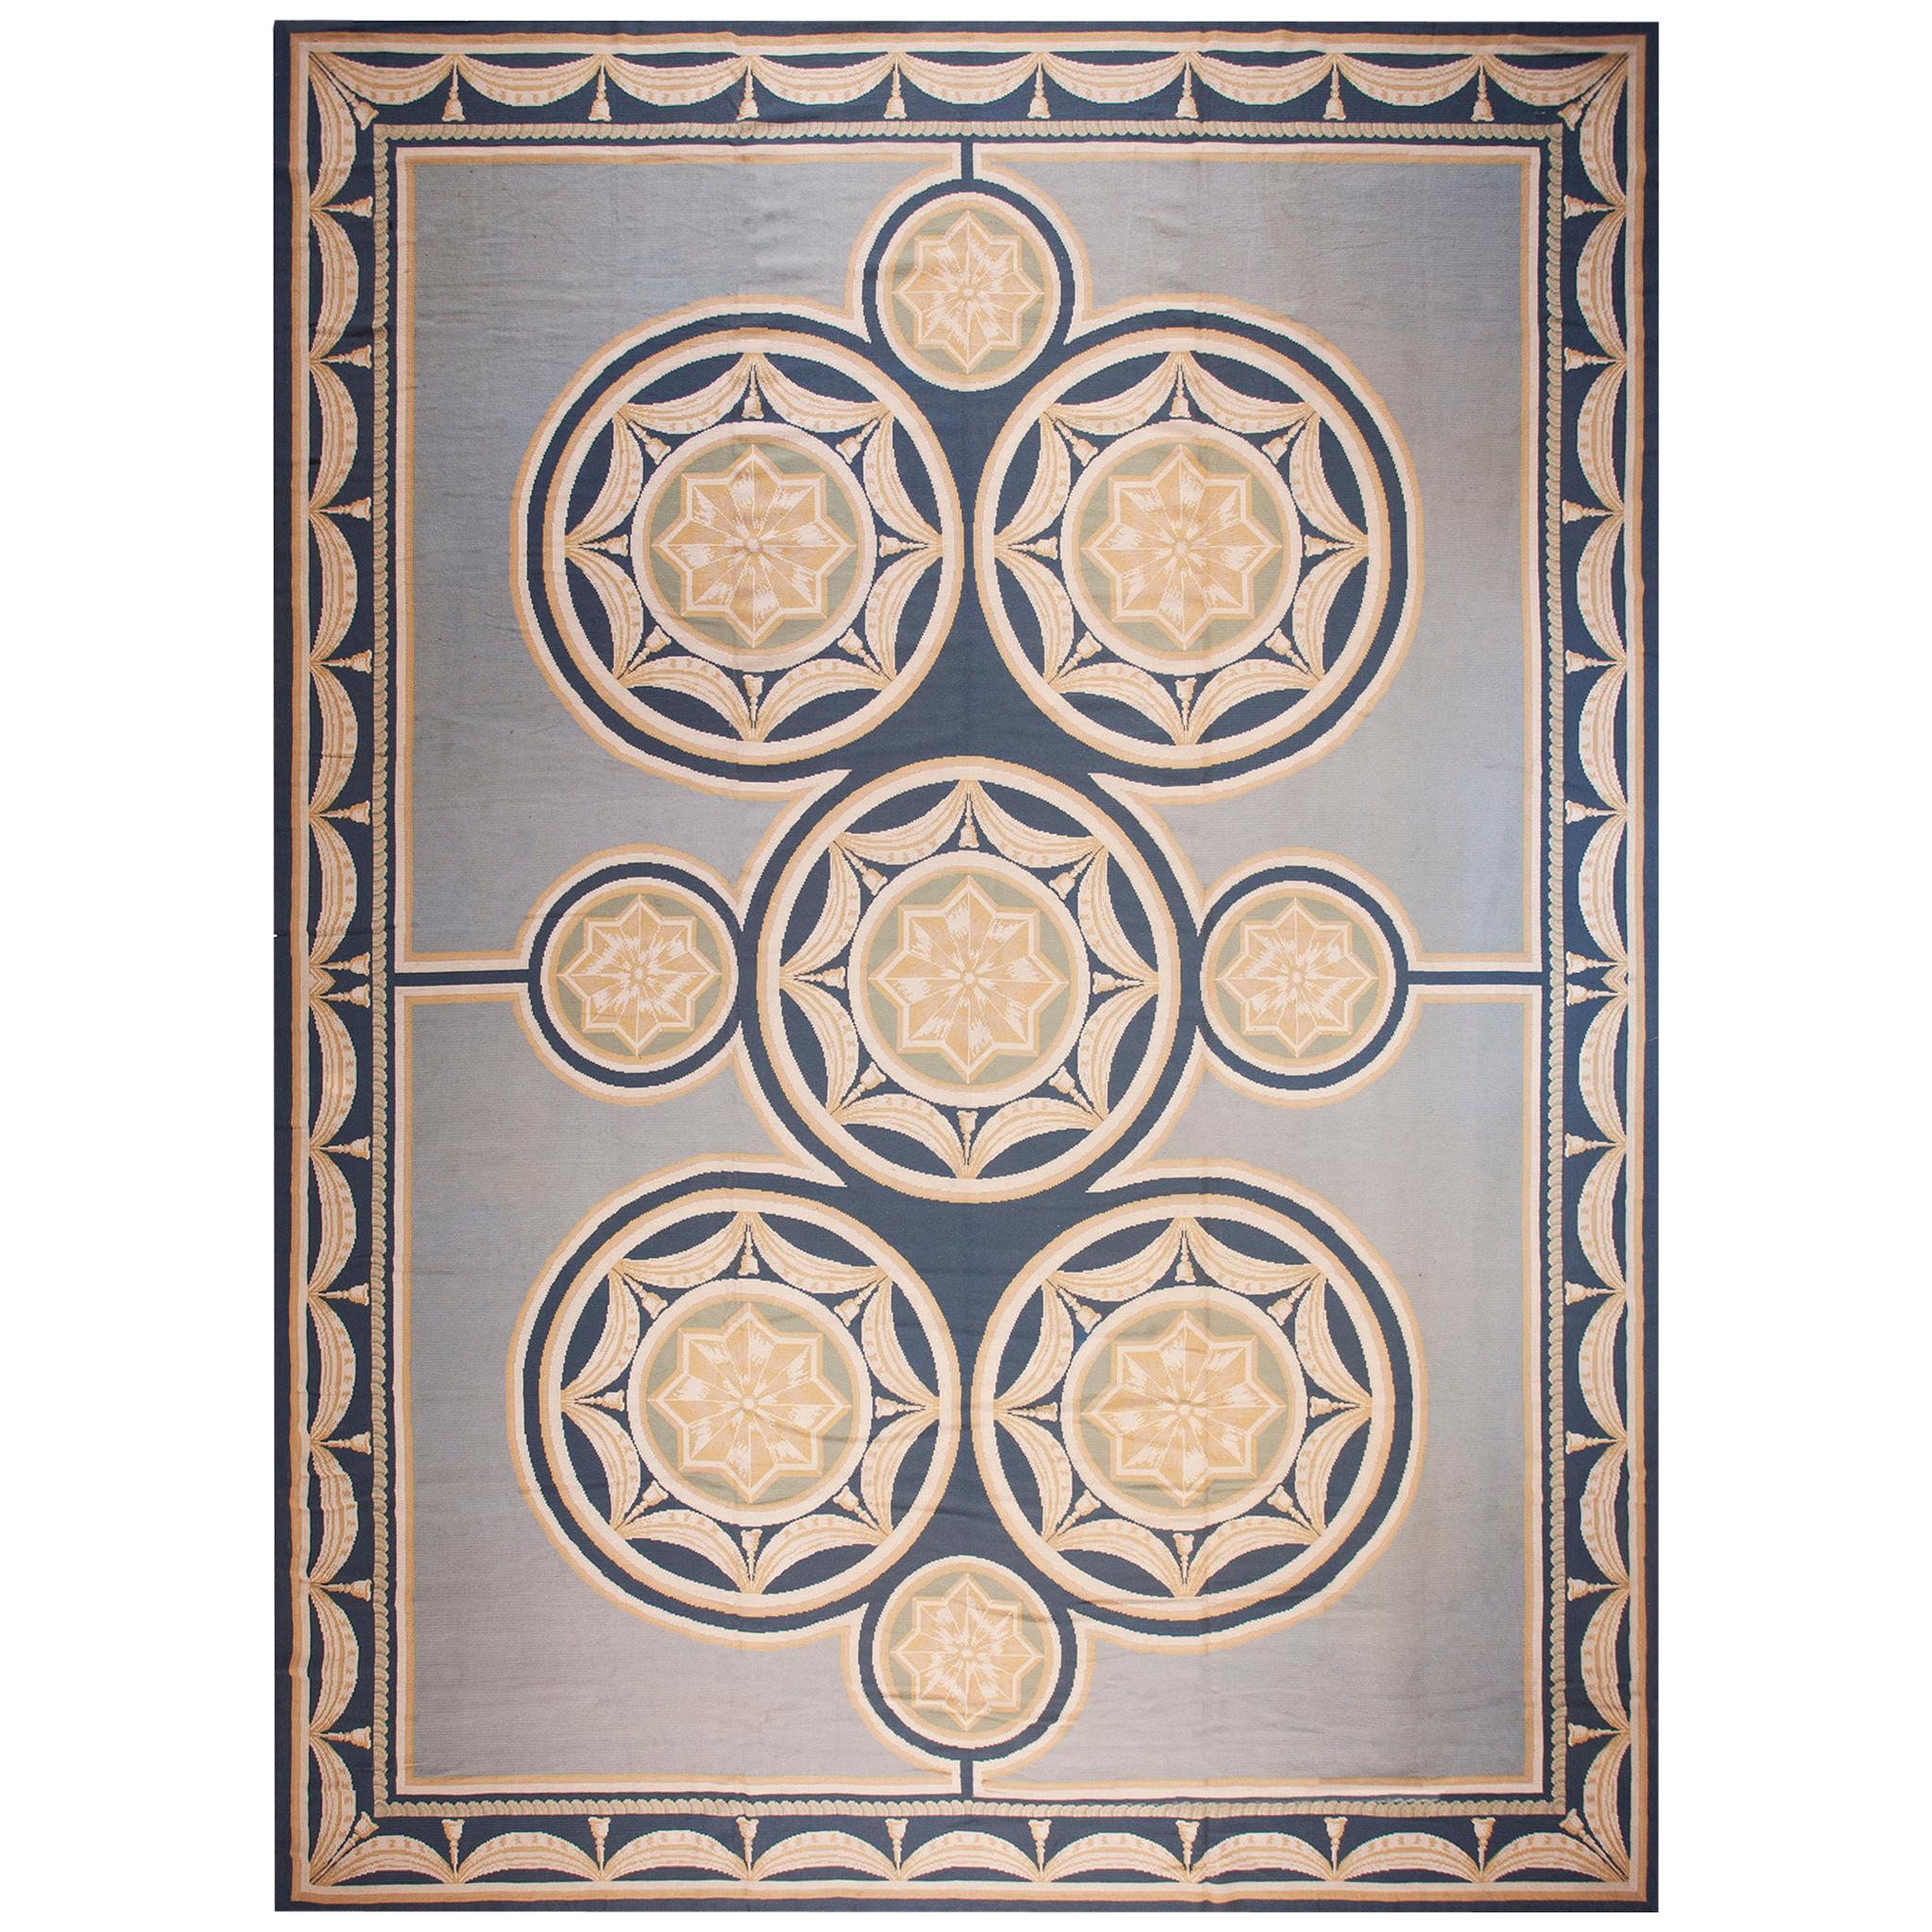 Early 20th Century Portuguese Needlepoint Carpet ( 15'6"x 21'6" - 472 x 655 )